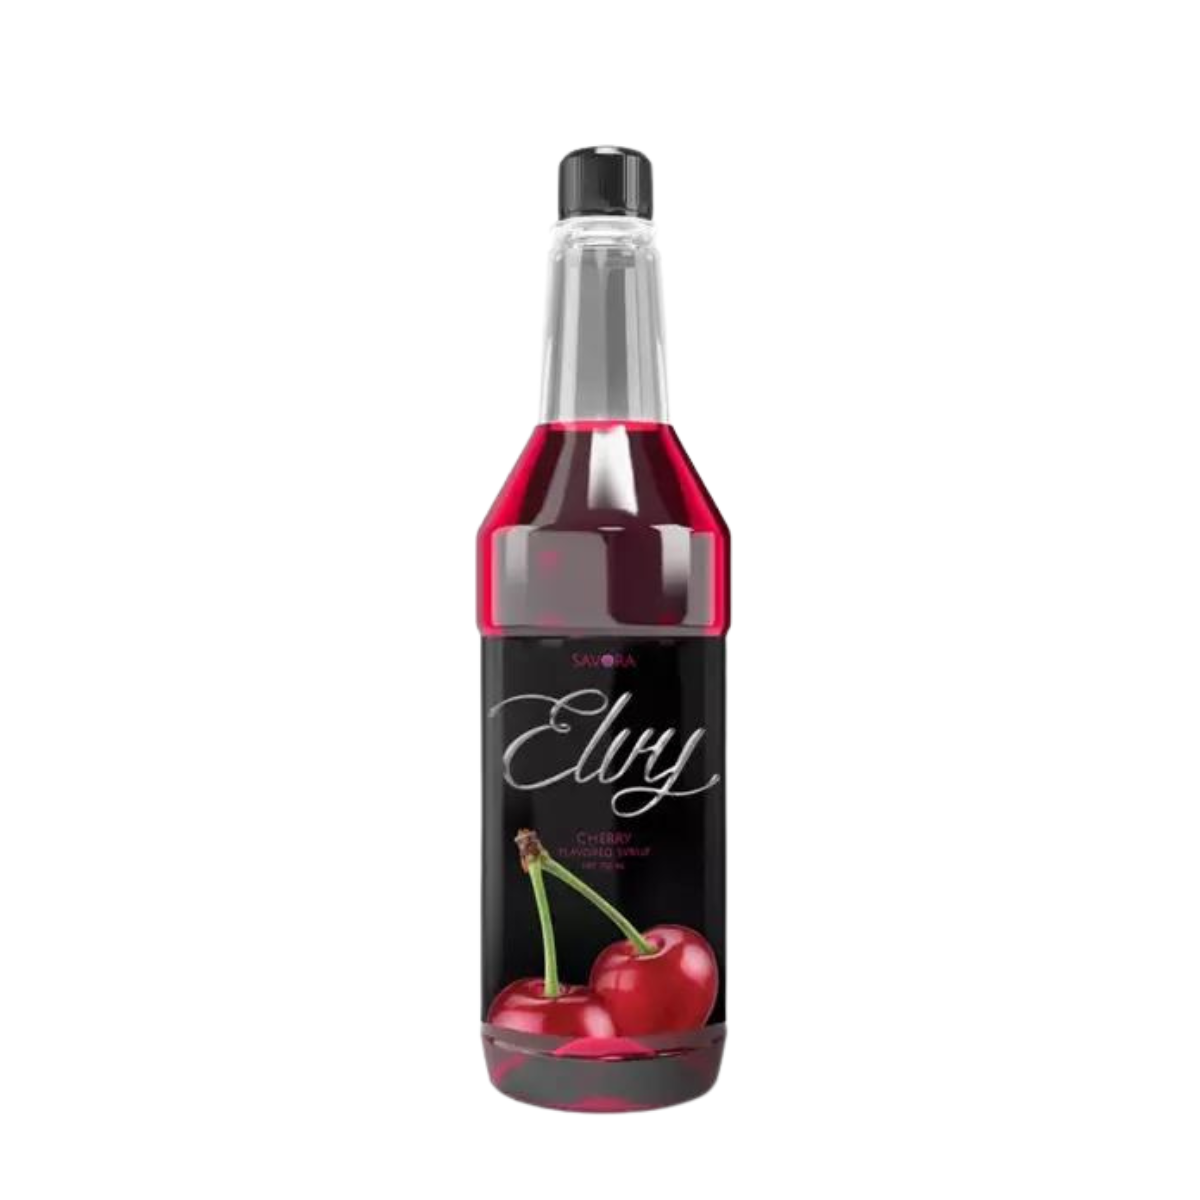 Savora Elvy Cherry Flavor Syrup 750ml